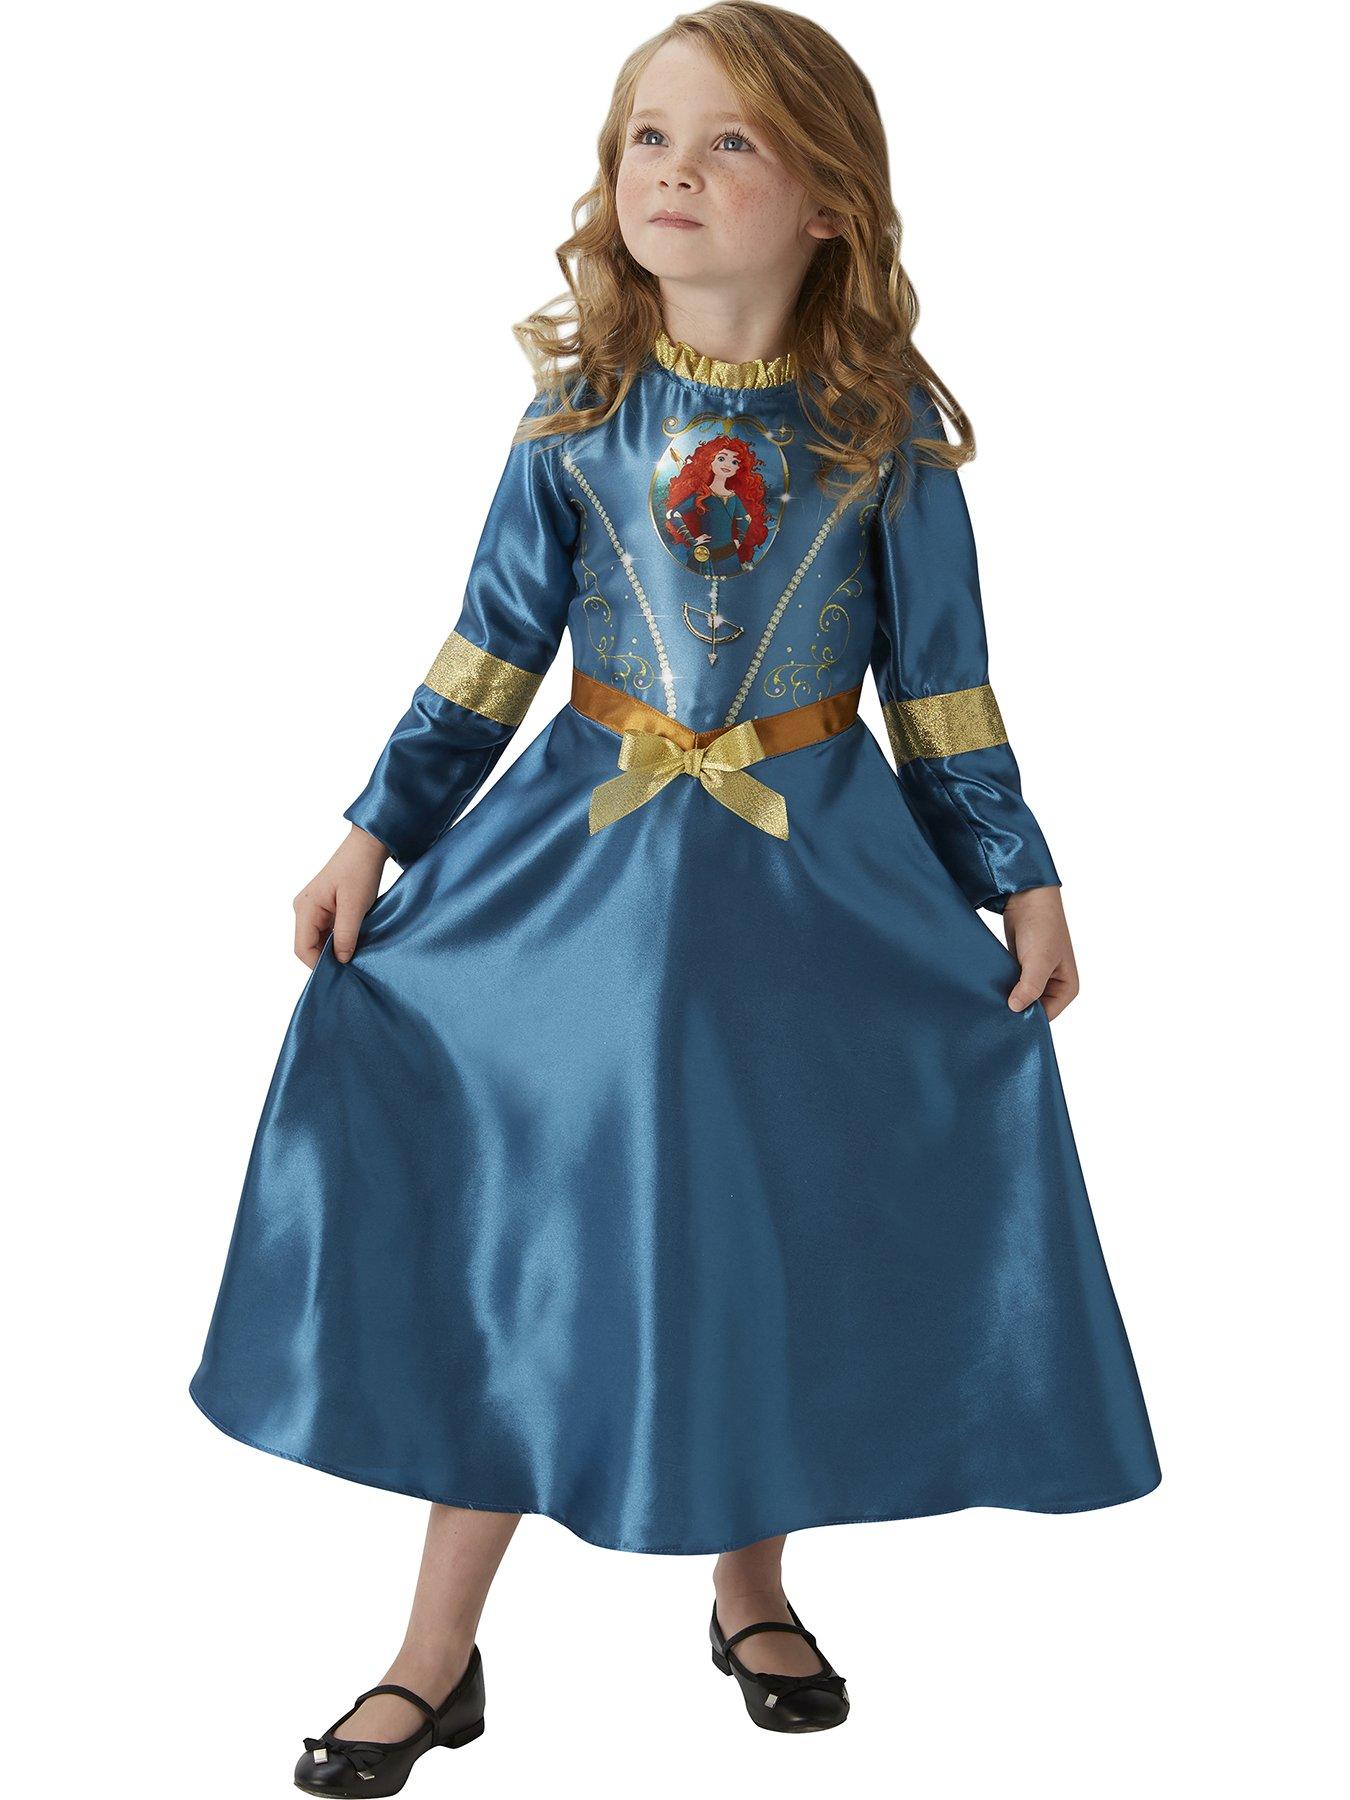 Disney Princess Fairytale Brave Merida Childs Costume 